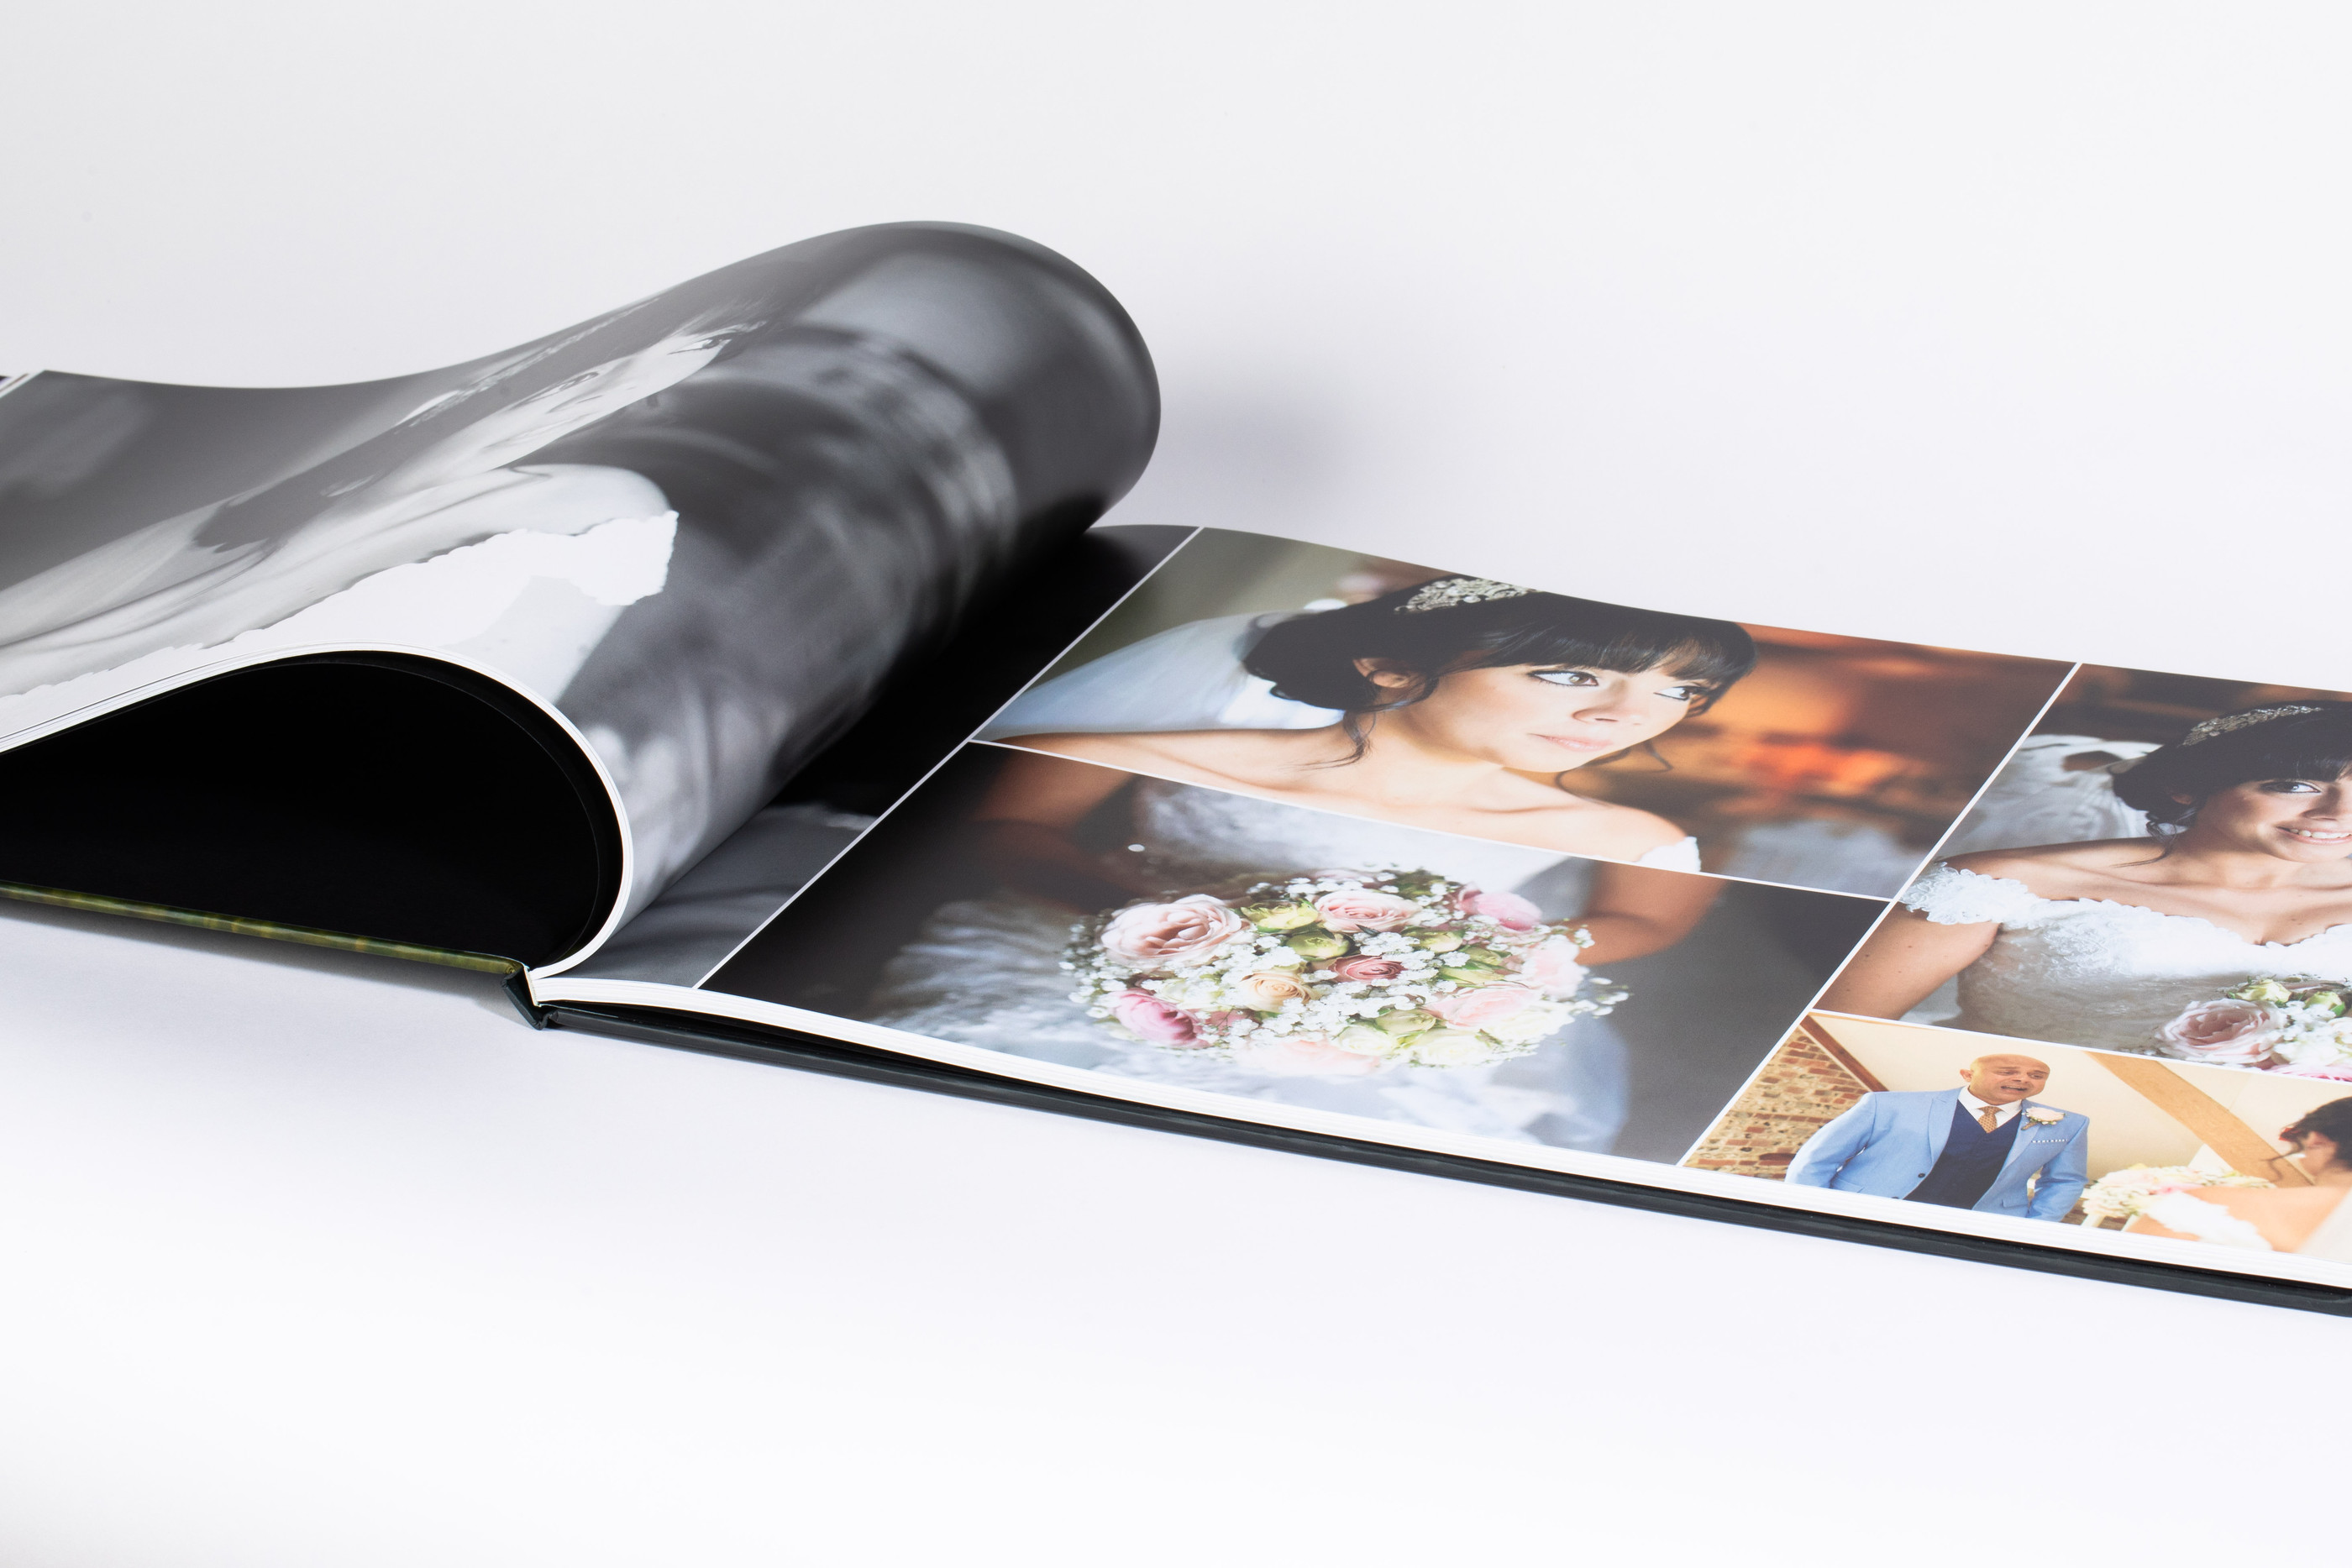 Large wedding photo book laying open